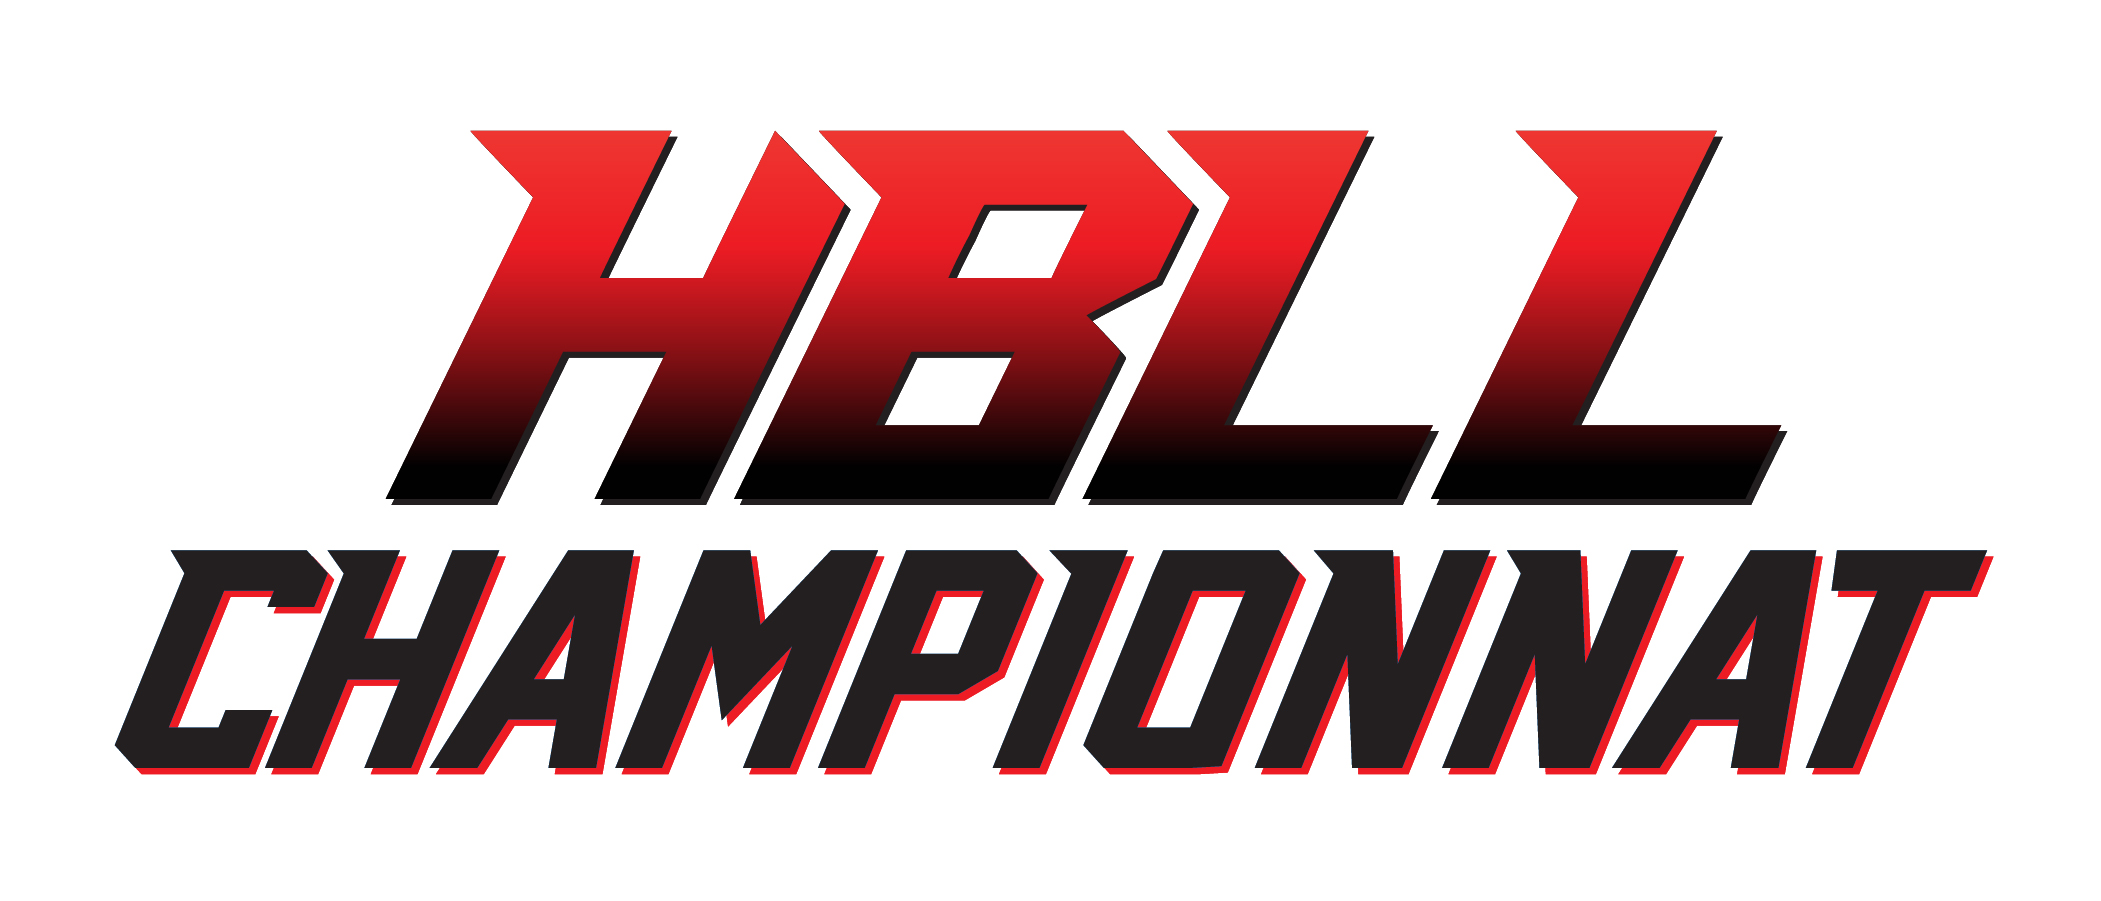 Logo Championnat (002)